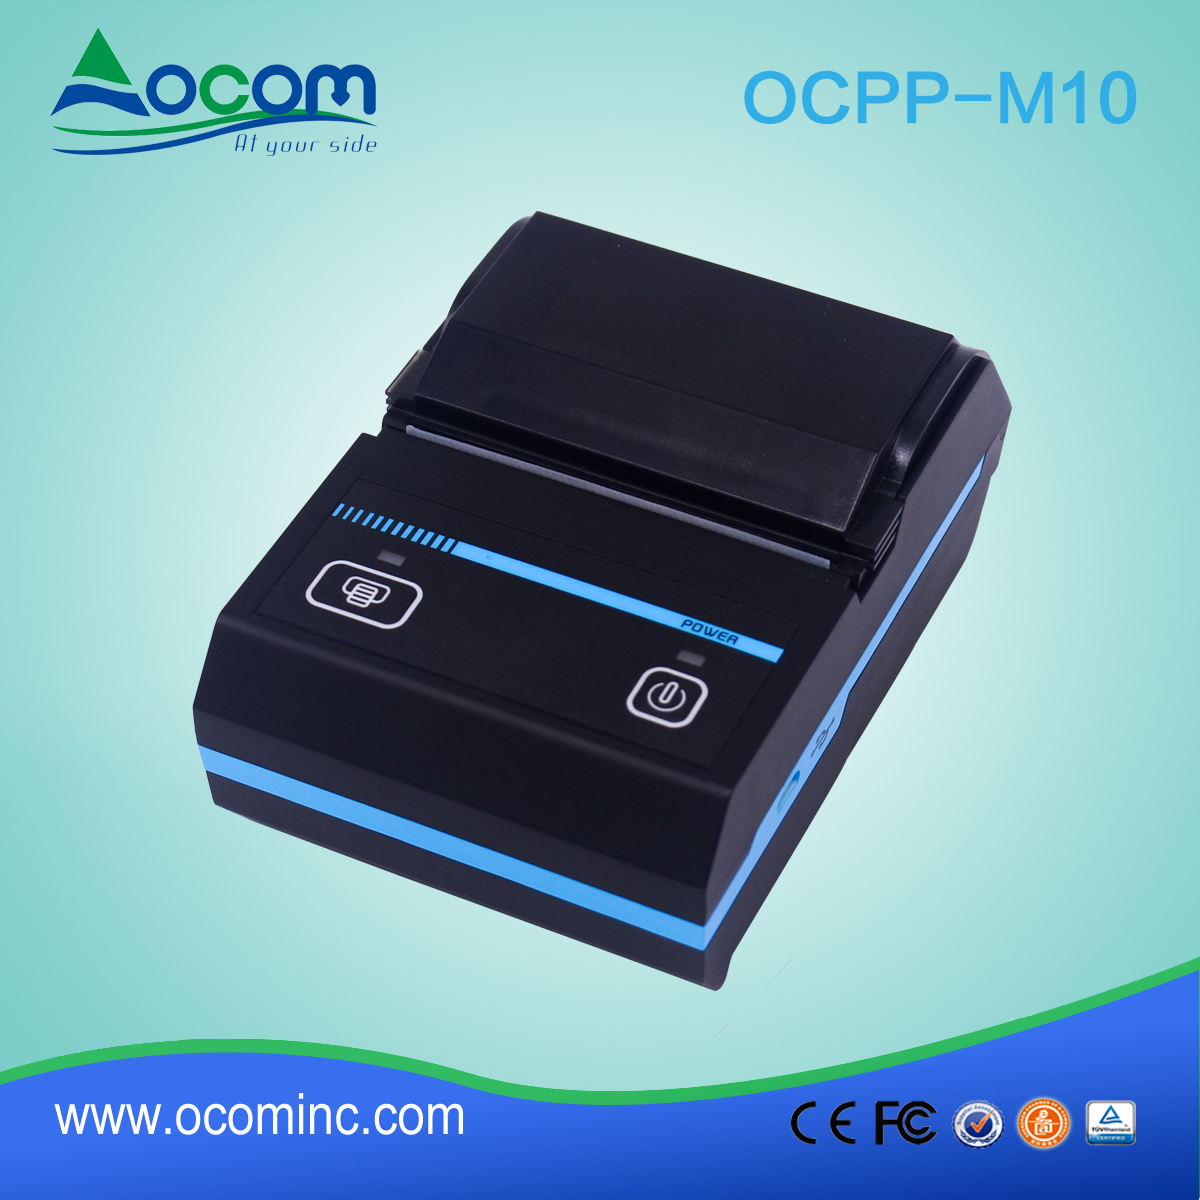 OCPP-M10 58 mm portátil mini impresora móvil térmica bluetooth